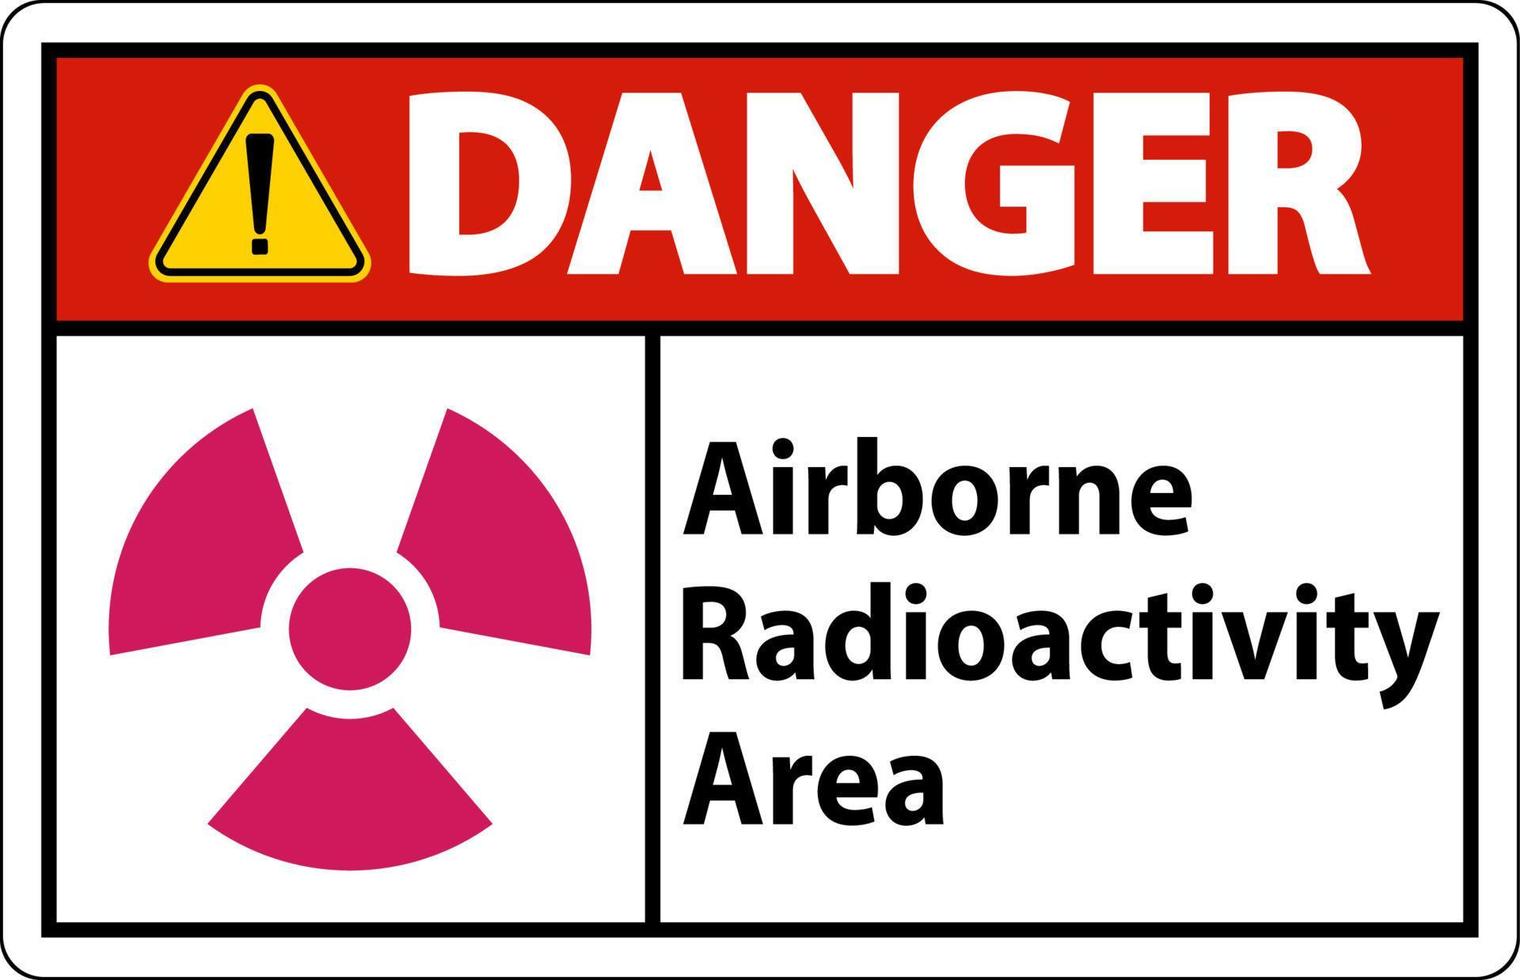 sinal de símbolo de área de radioatividade no ar perigo no fundo branco vetor